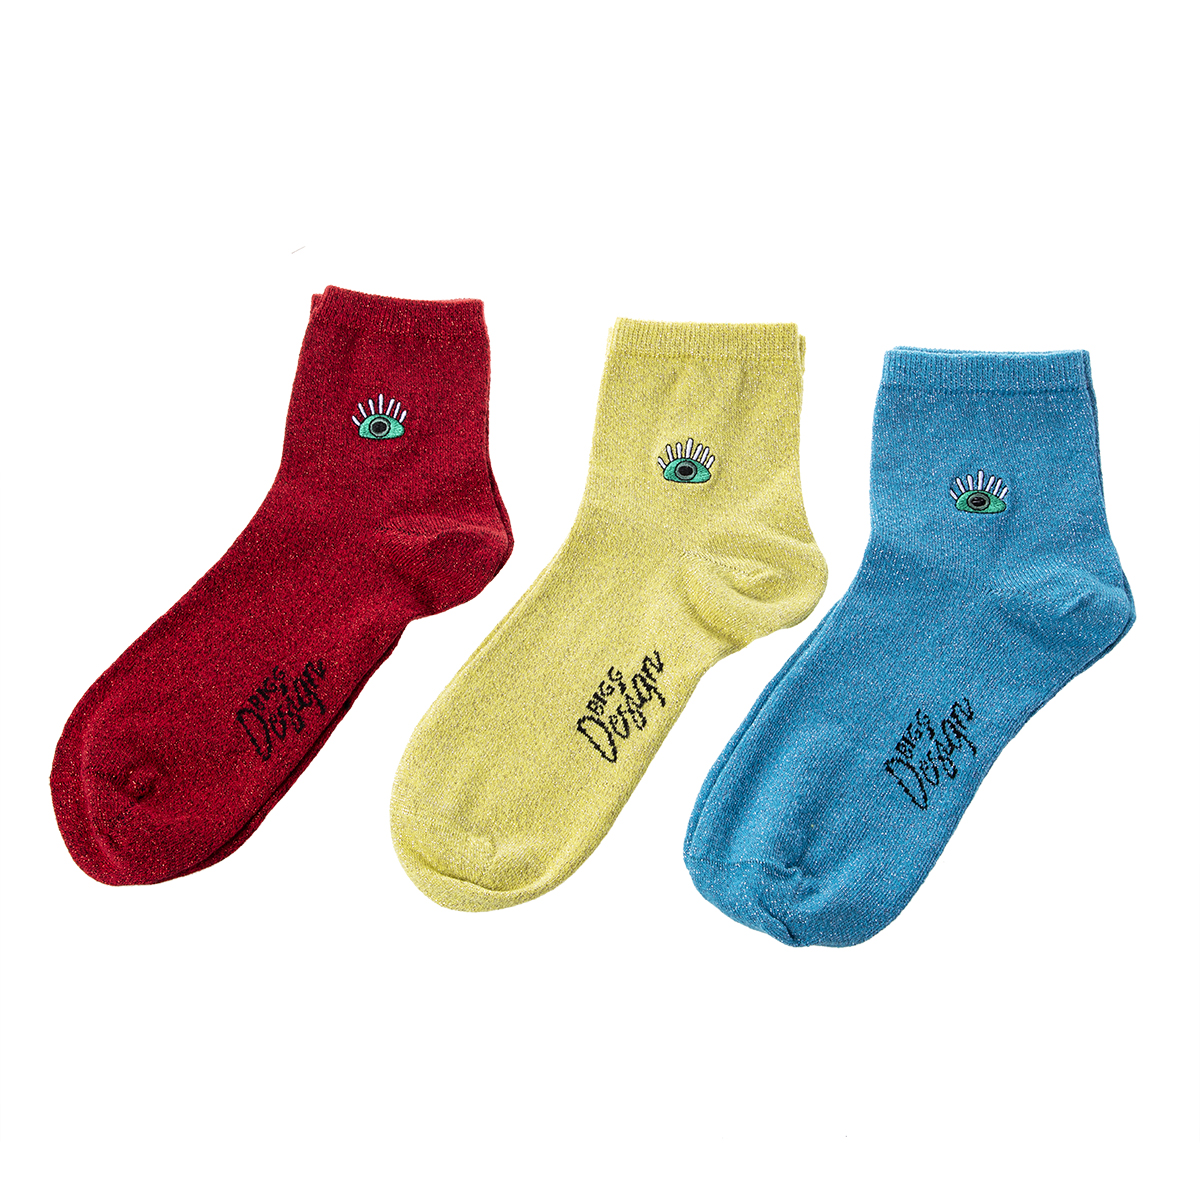  Biggdesign Women's Socks Set, Cotton Super Soft Casual Socks, Shiny Pearl Colorful Crew, Low Cut, Ankle, Quarter Socks, Multipack Bulk Socks, 3 Pairs